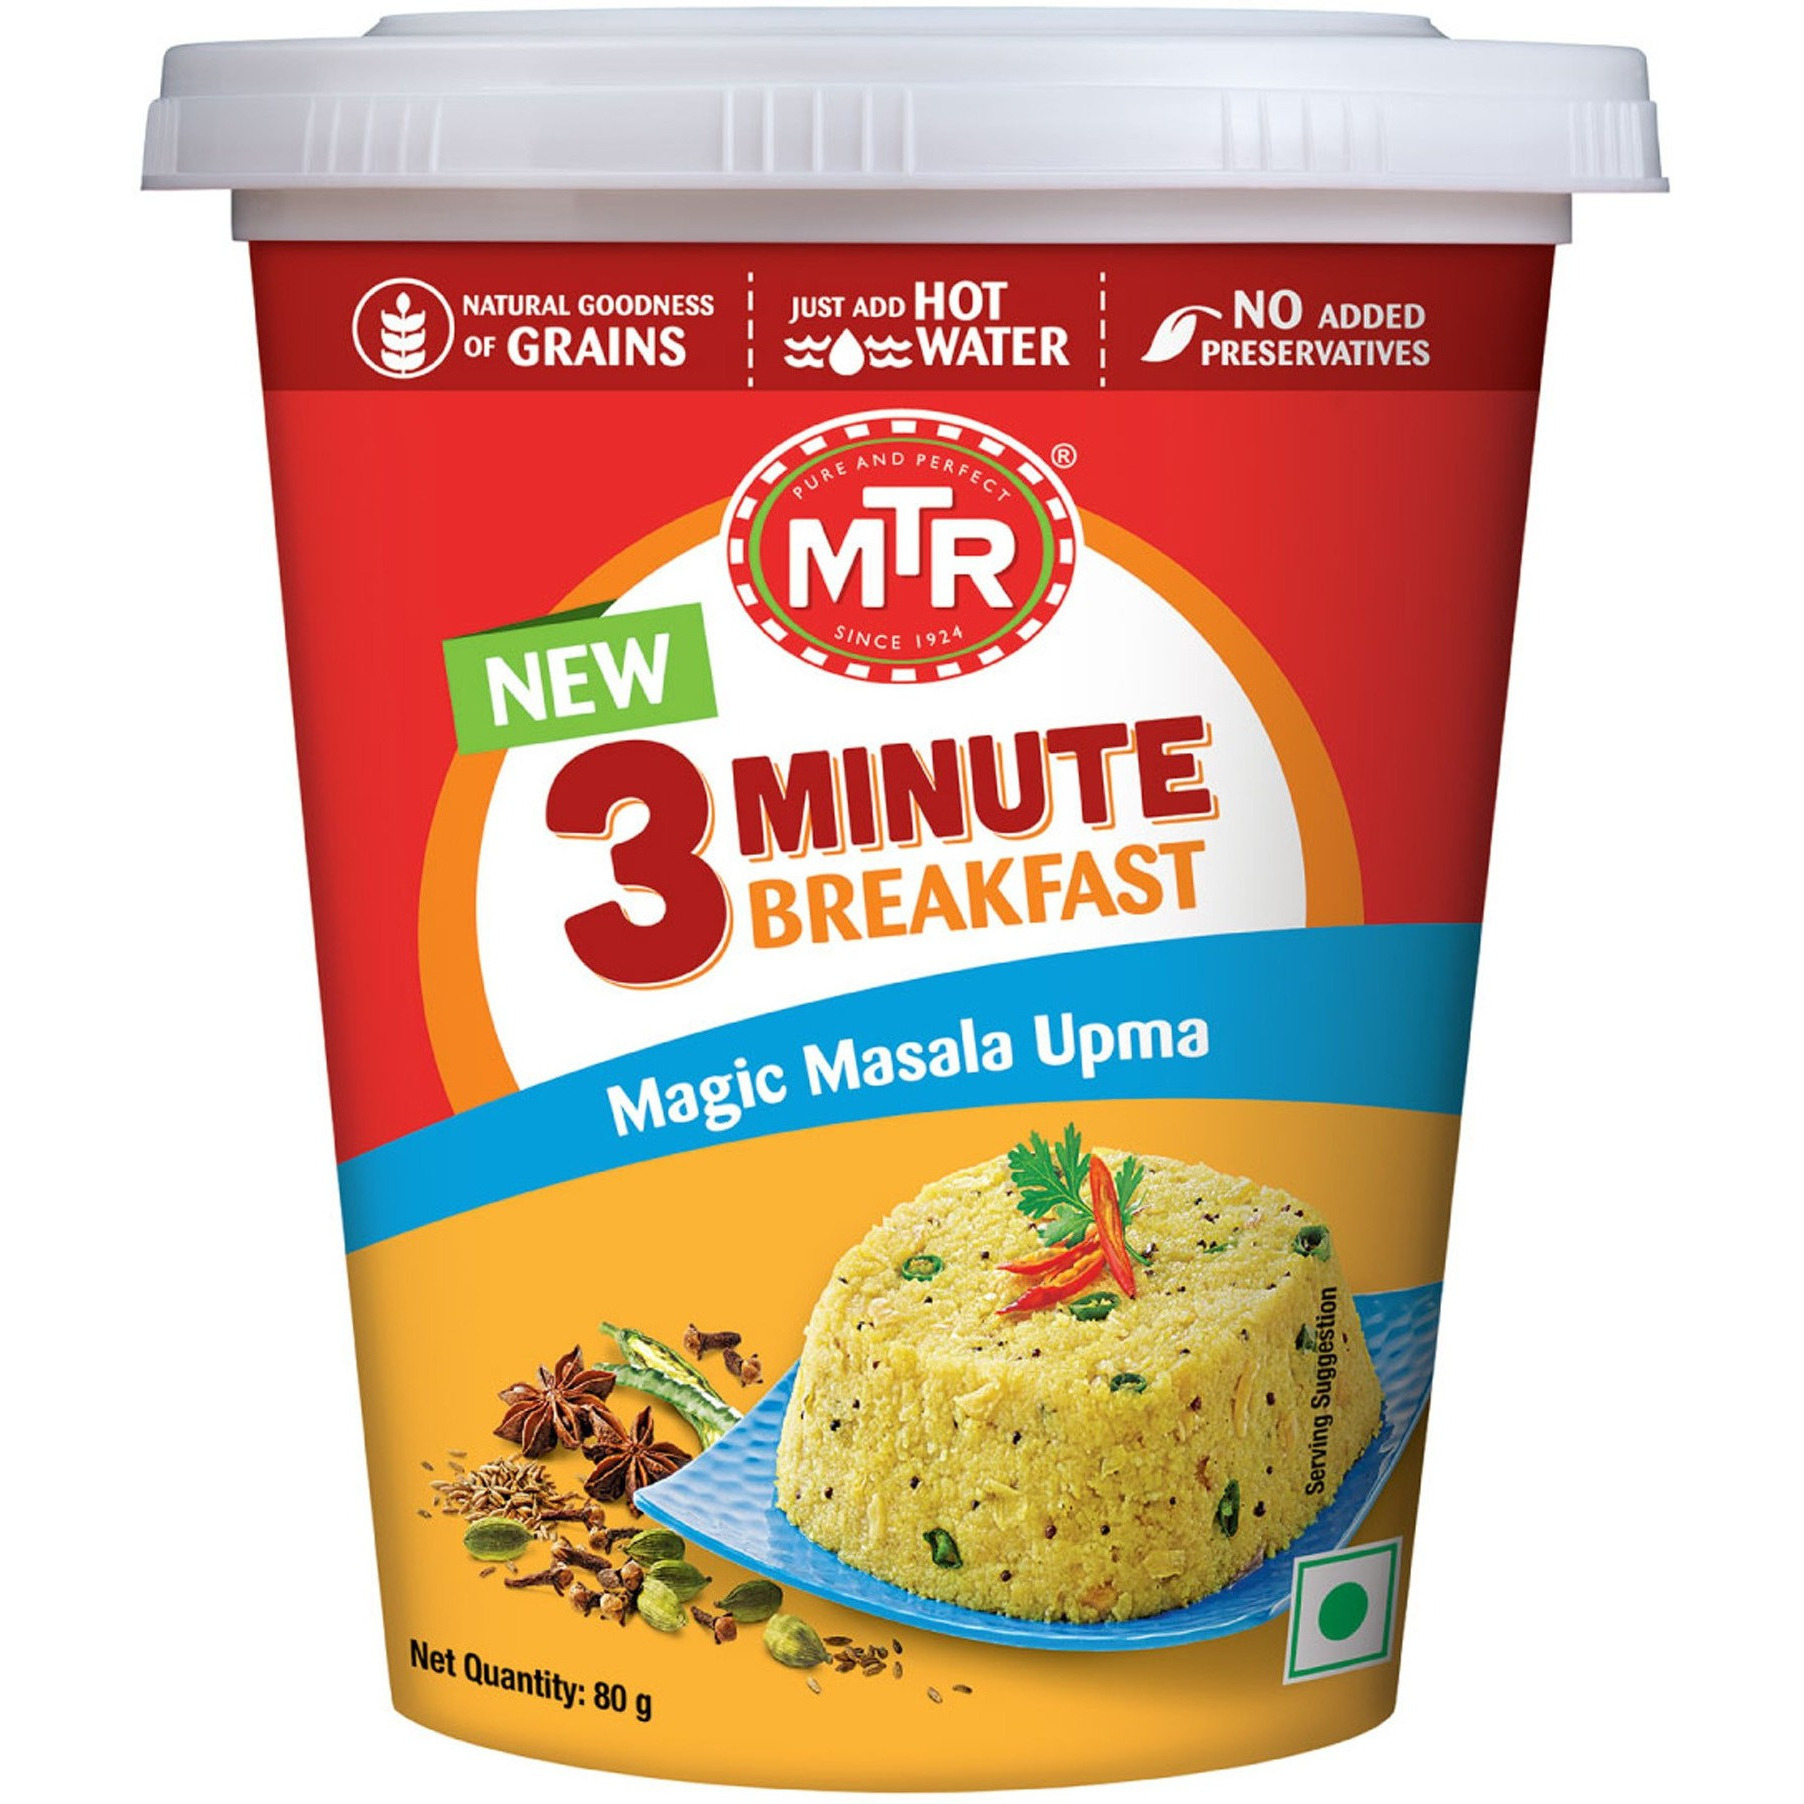 Pack of 5 - Mtr 3 Minute Breakfast Cup Magic Masala Upma - 79 Gm (2.82 Oz)